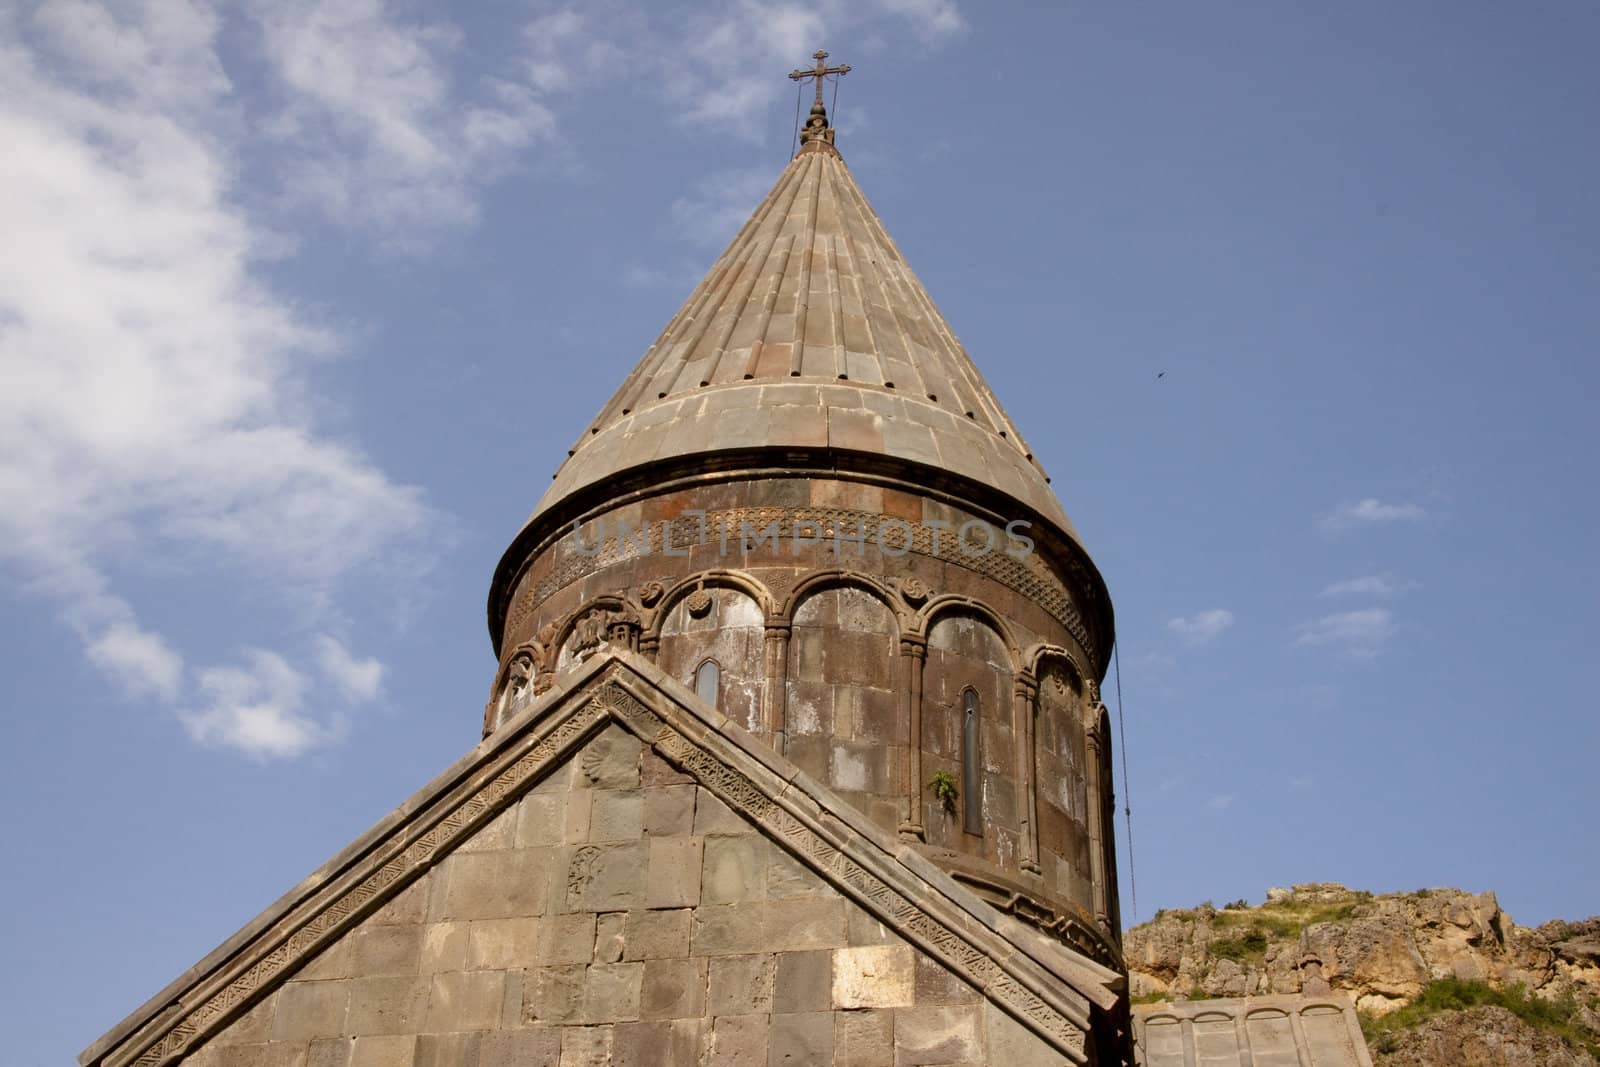 Geghard monastyr UNESCO object near Yerevan - Armenia.